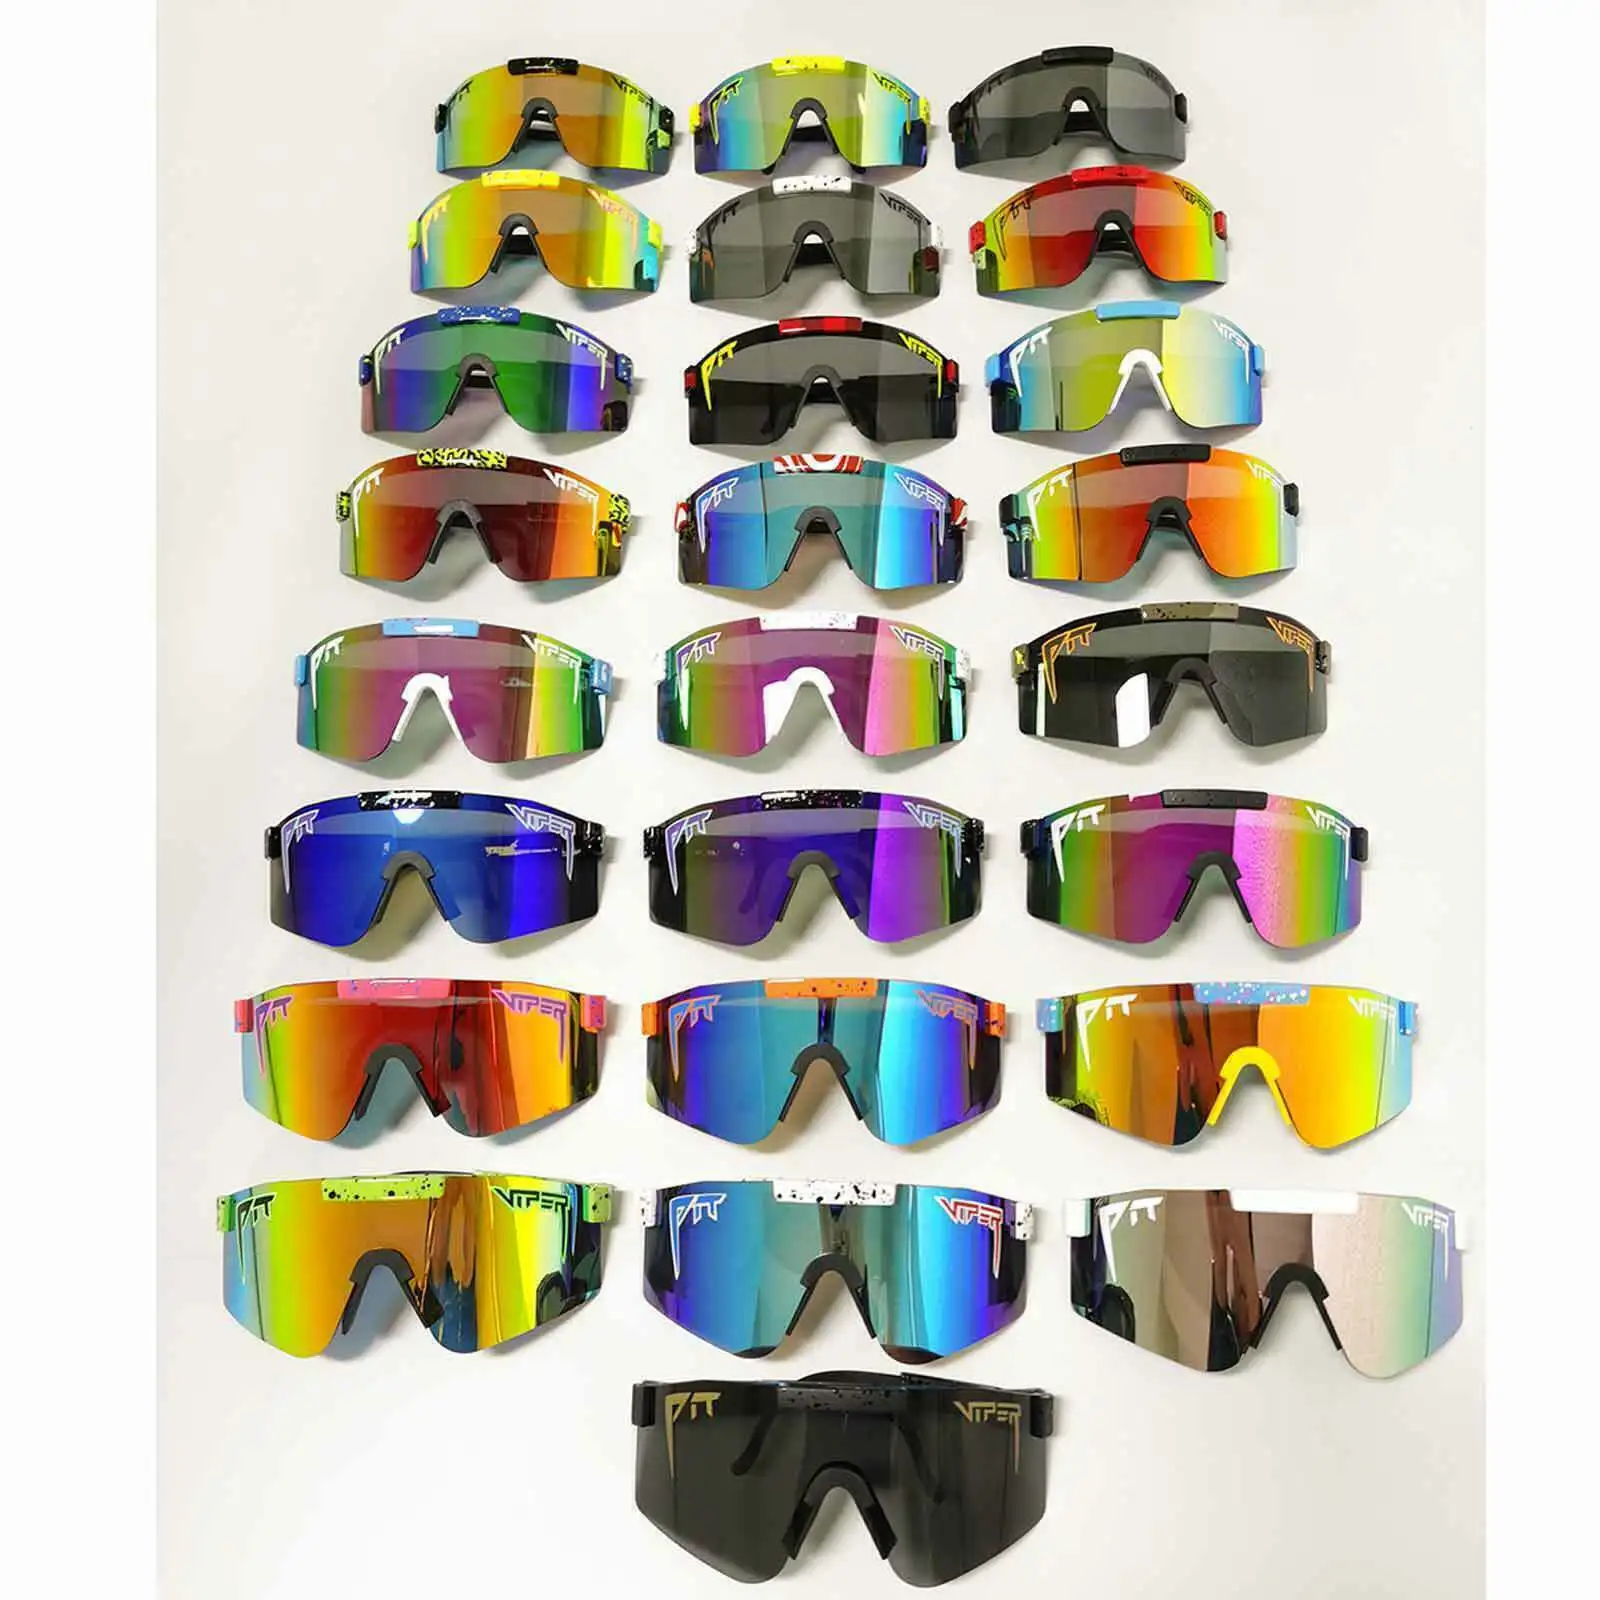 Pit Viper Sport Sunglasses Polarized Sunglasses for Men Women Outdoor 